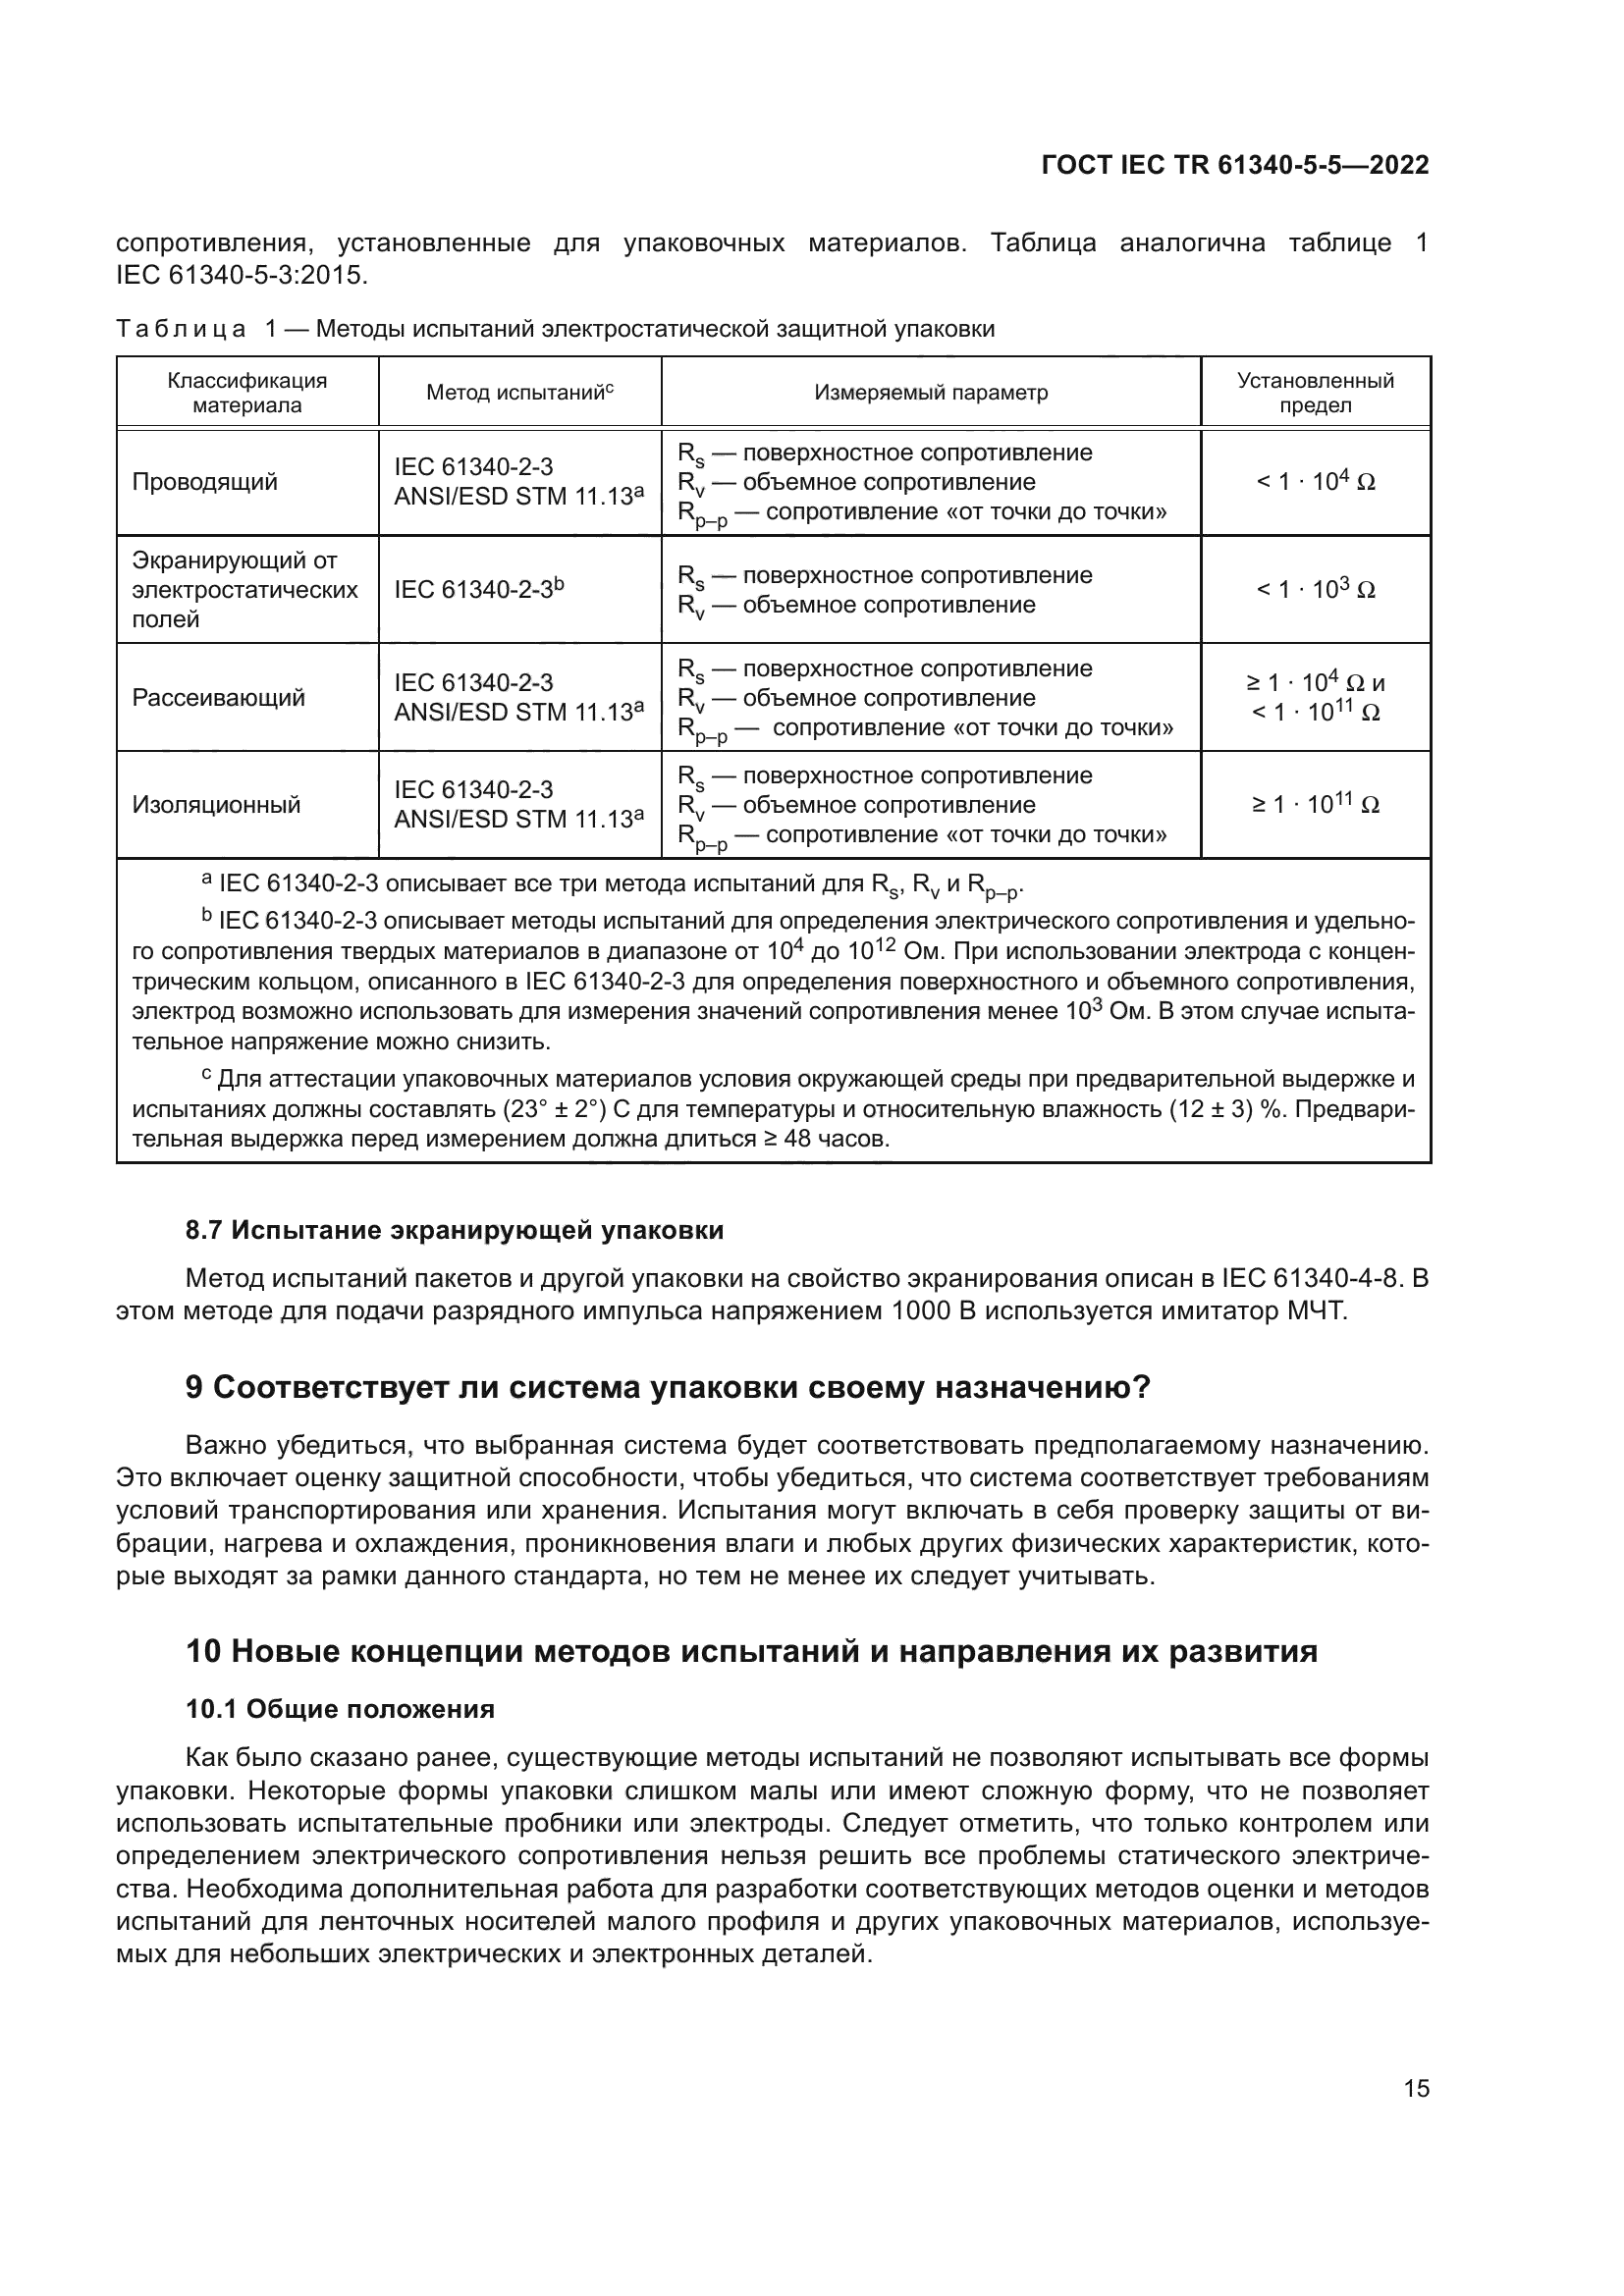 ГОСТ IEC TR 61340-5-5-2022